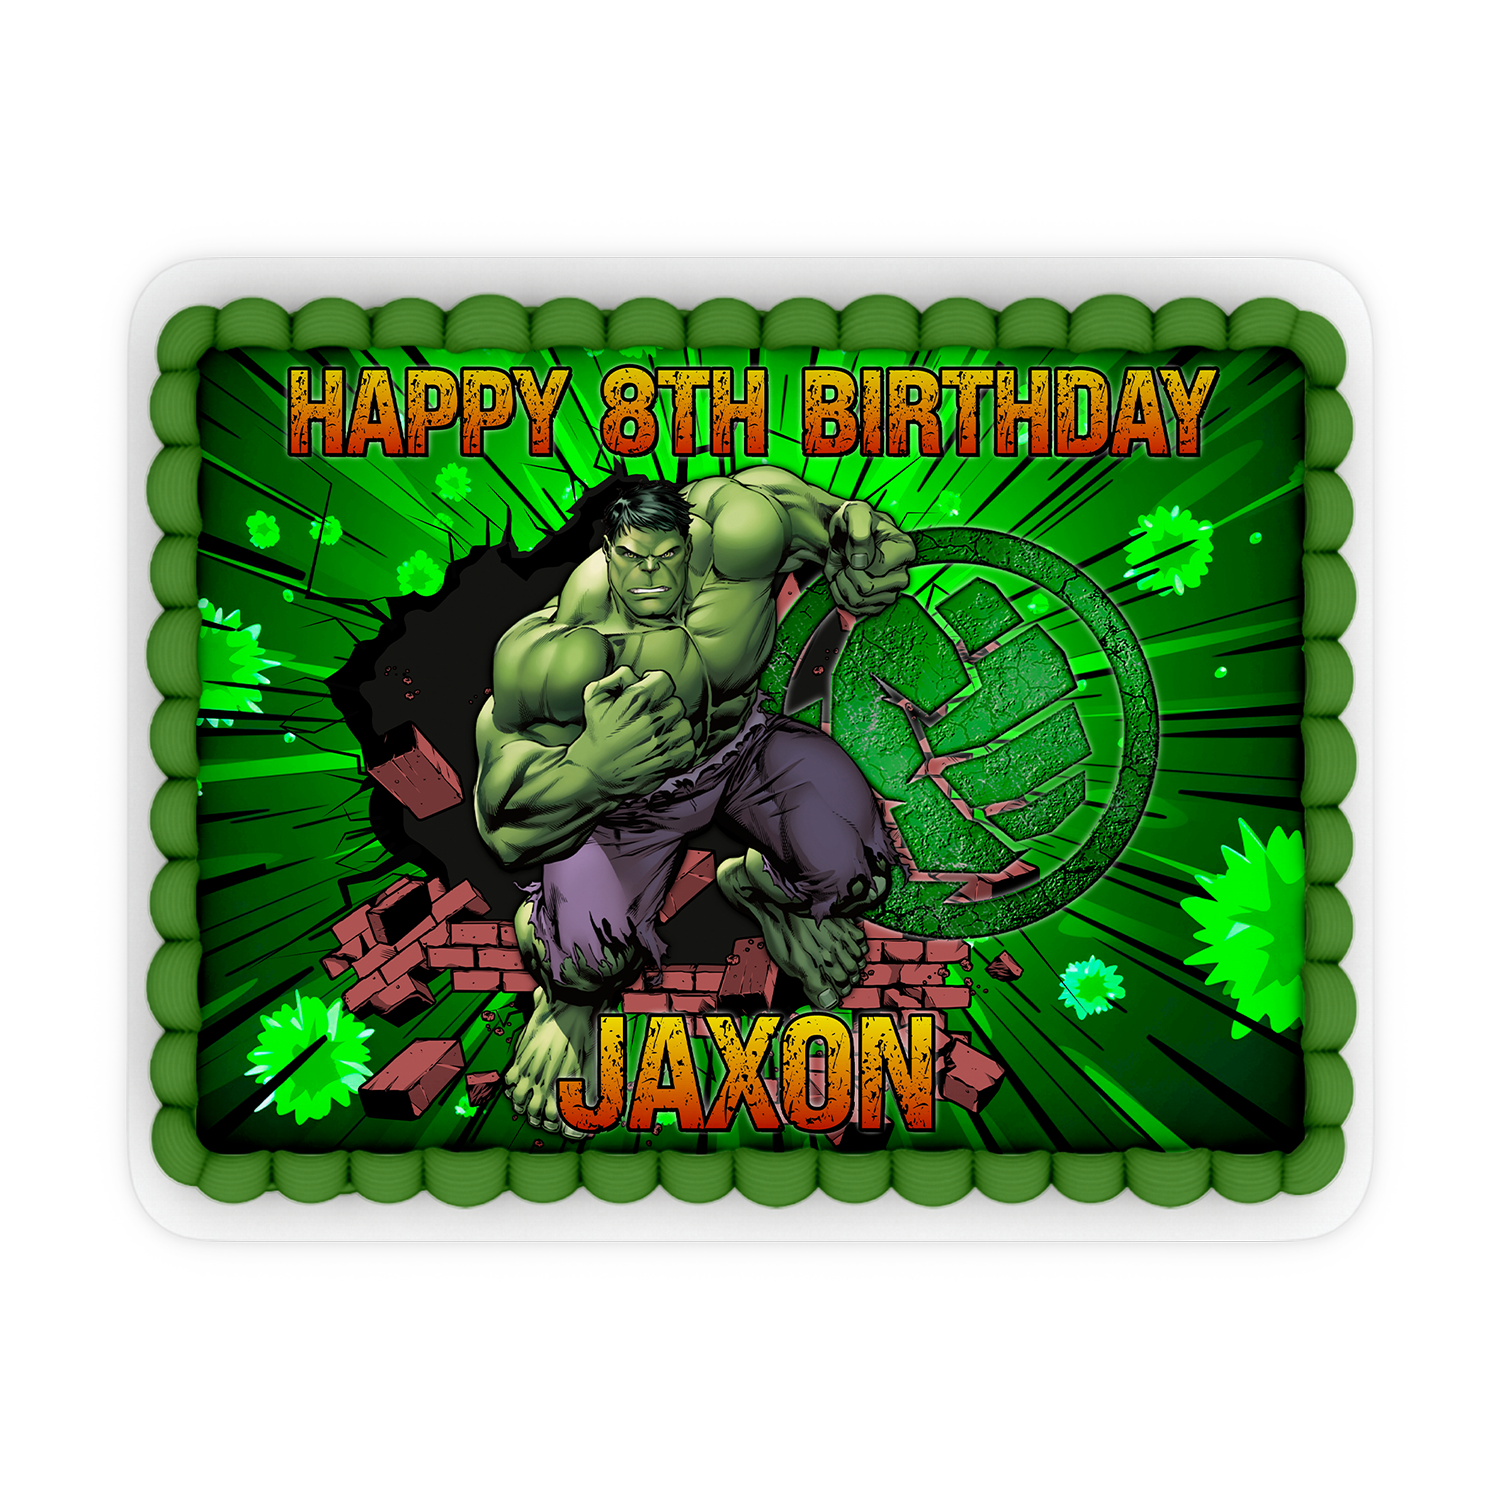 The Incredible Hulk Birthday Cake With Your Name